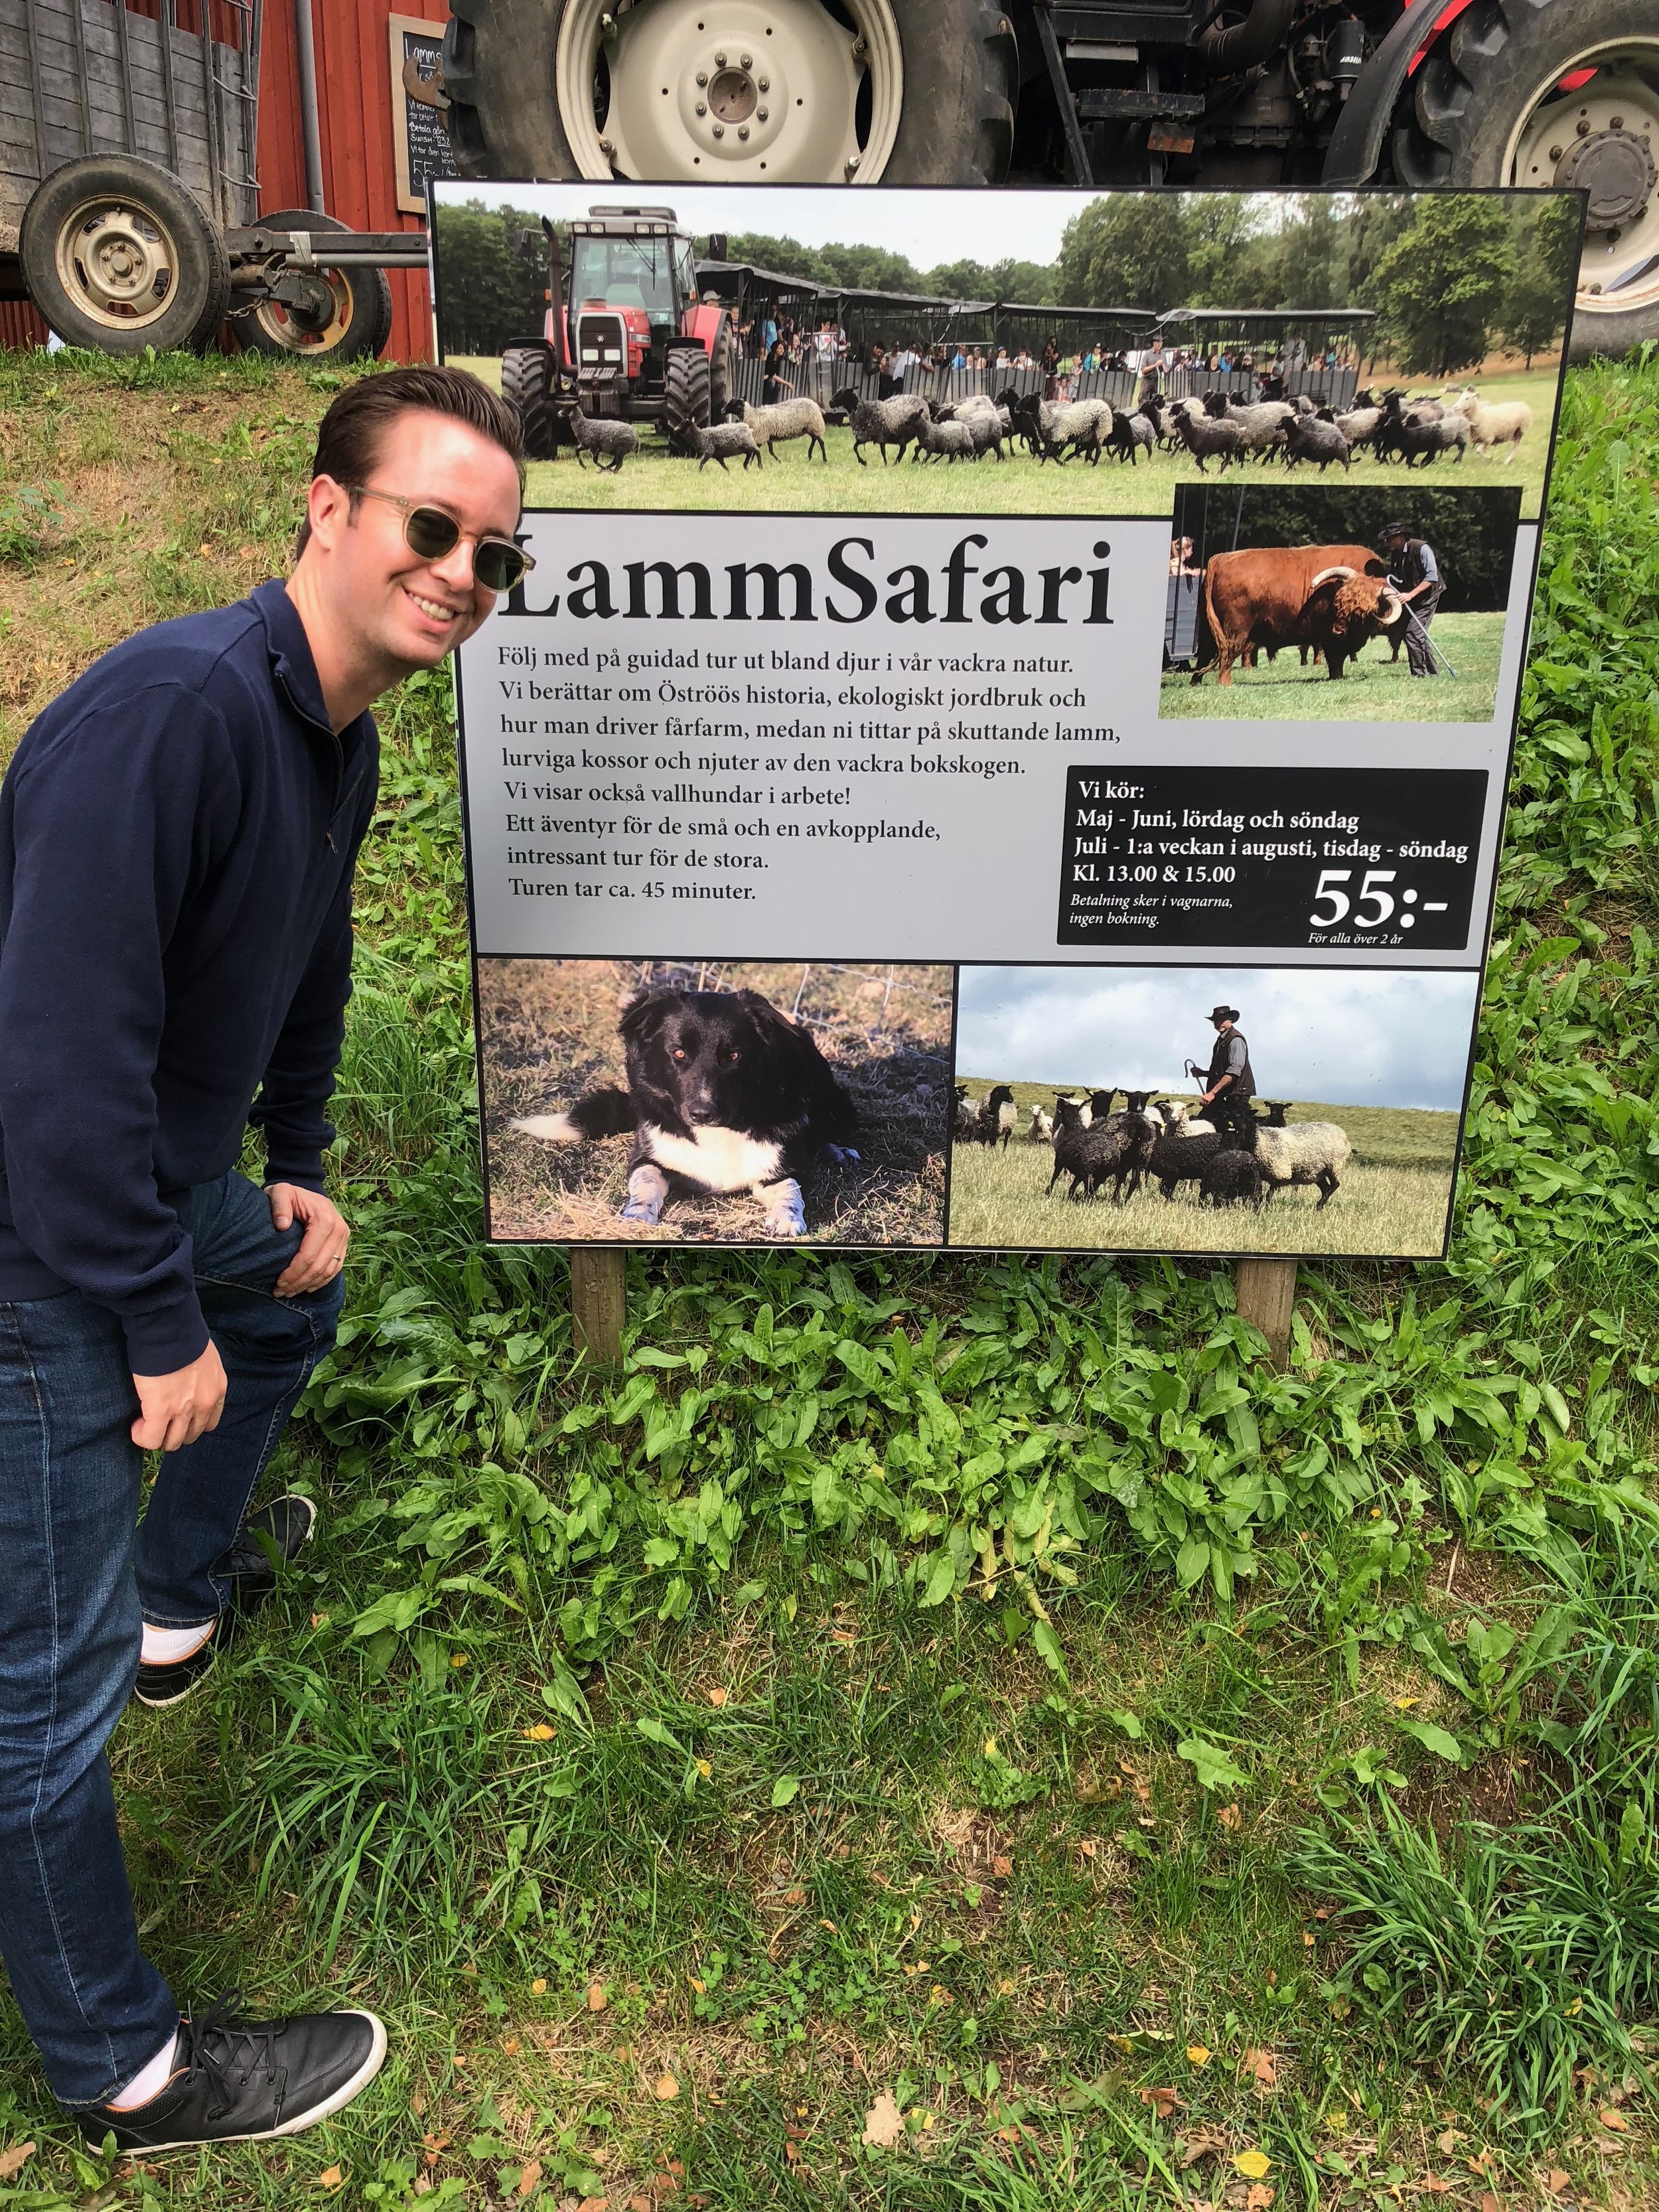 At the farm, you can hop on a lamb safari